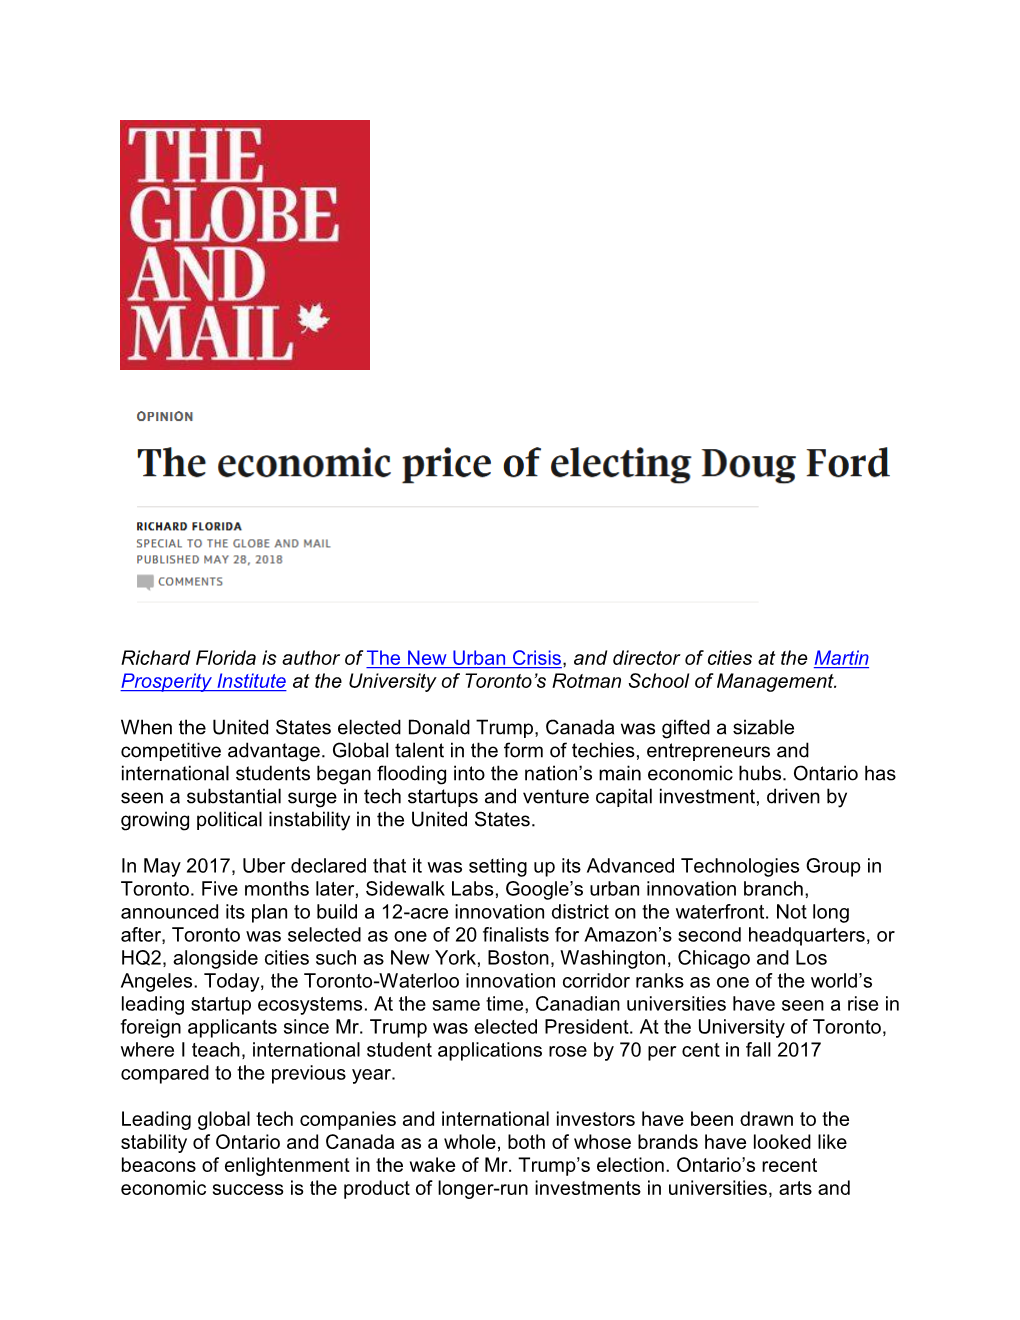 The Economic Price of Electing Doug Ford